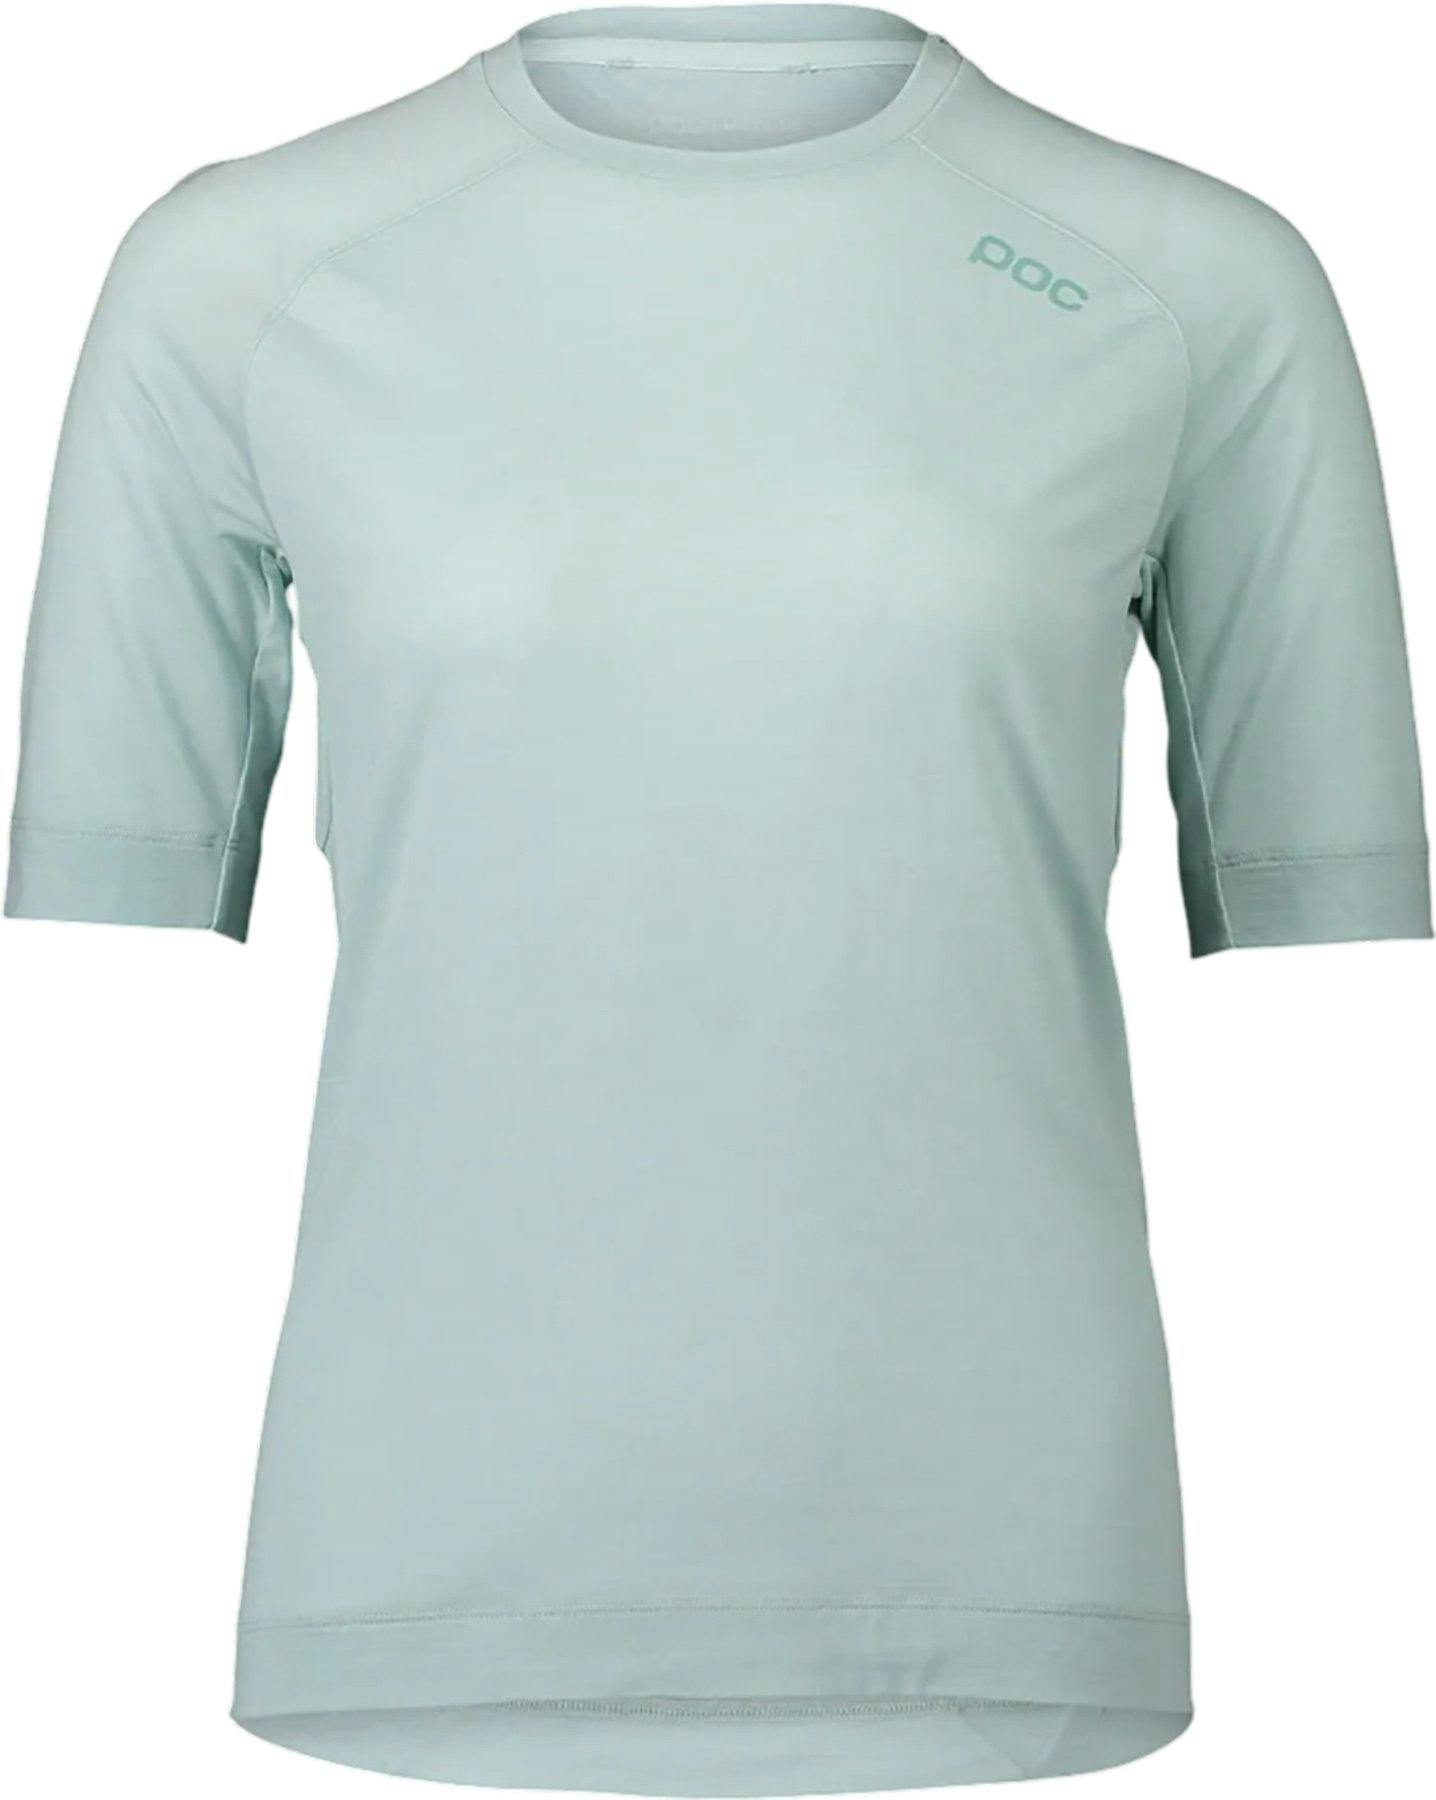 Product image for Light Merino Wool T-Shirt - Women's